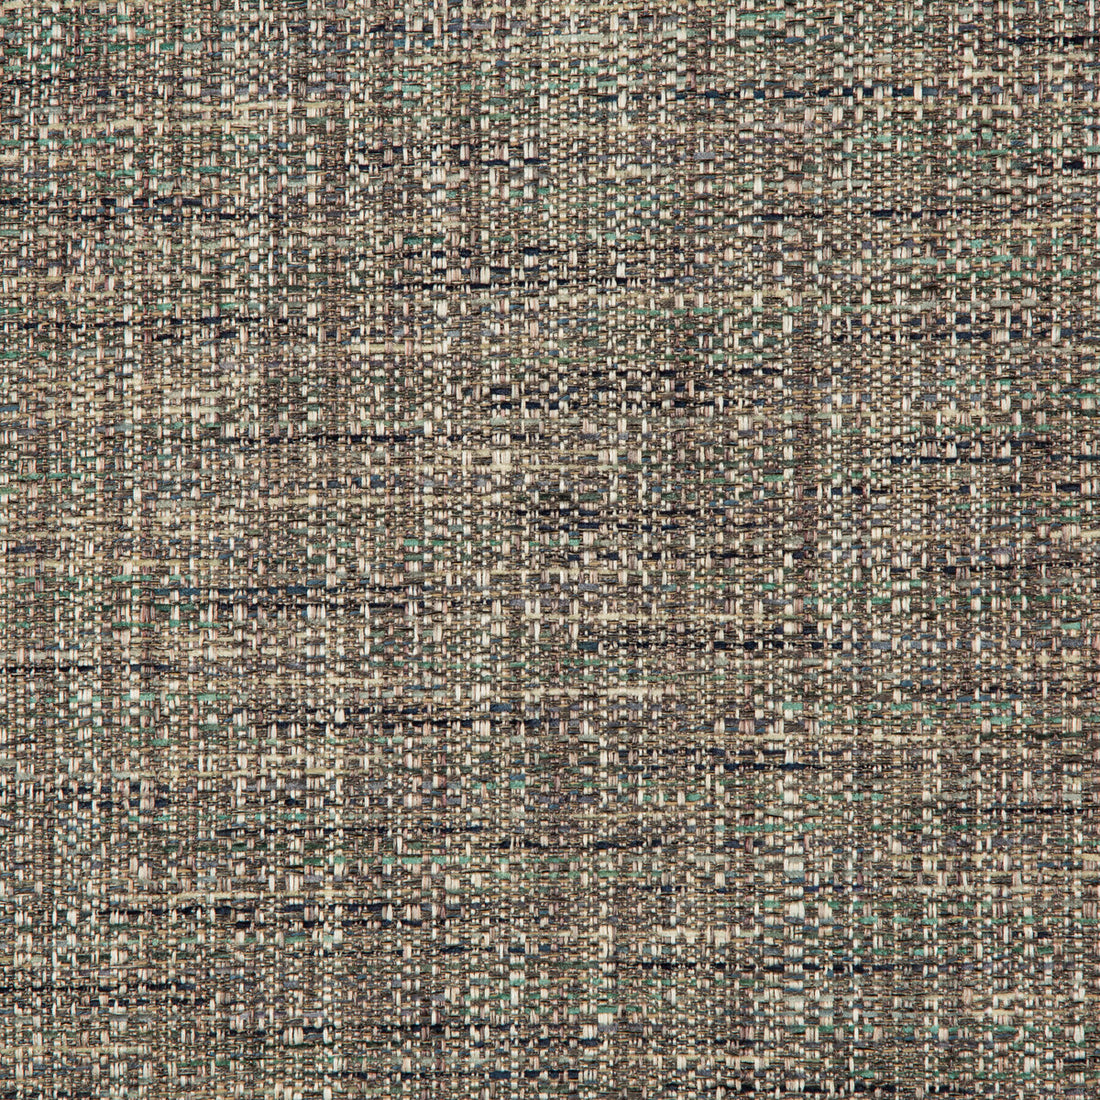 Kravet Smart fabric in 35929-521 color - pattern 35929.521.0 - by Kravet Smart in the Performance Kravetarmor collection